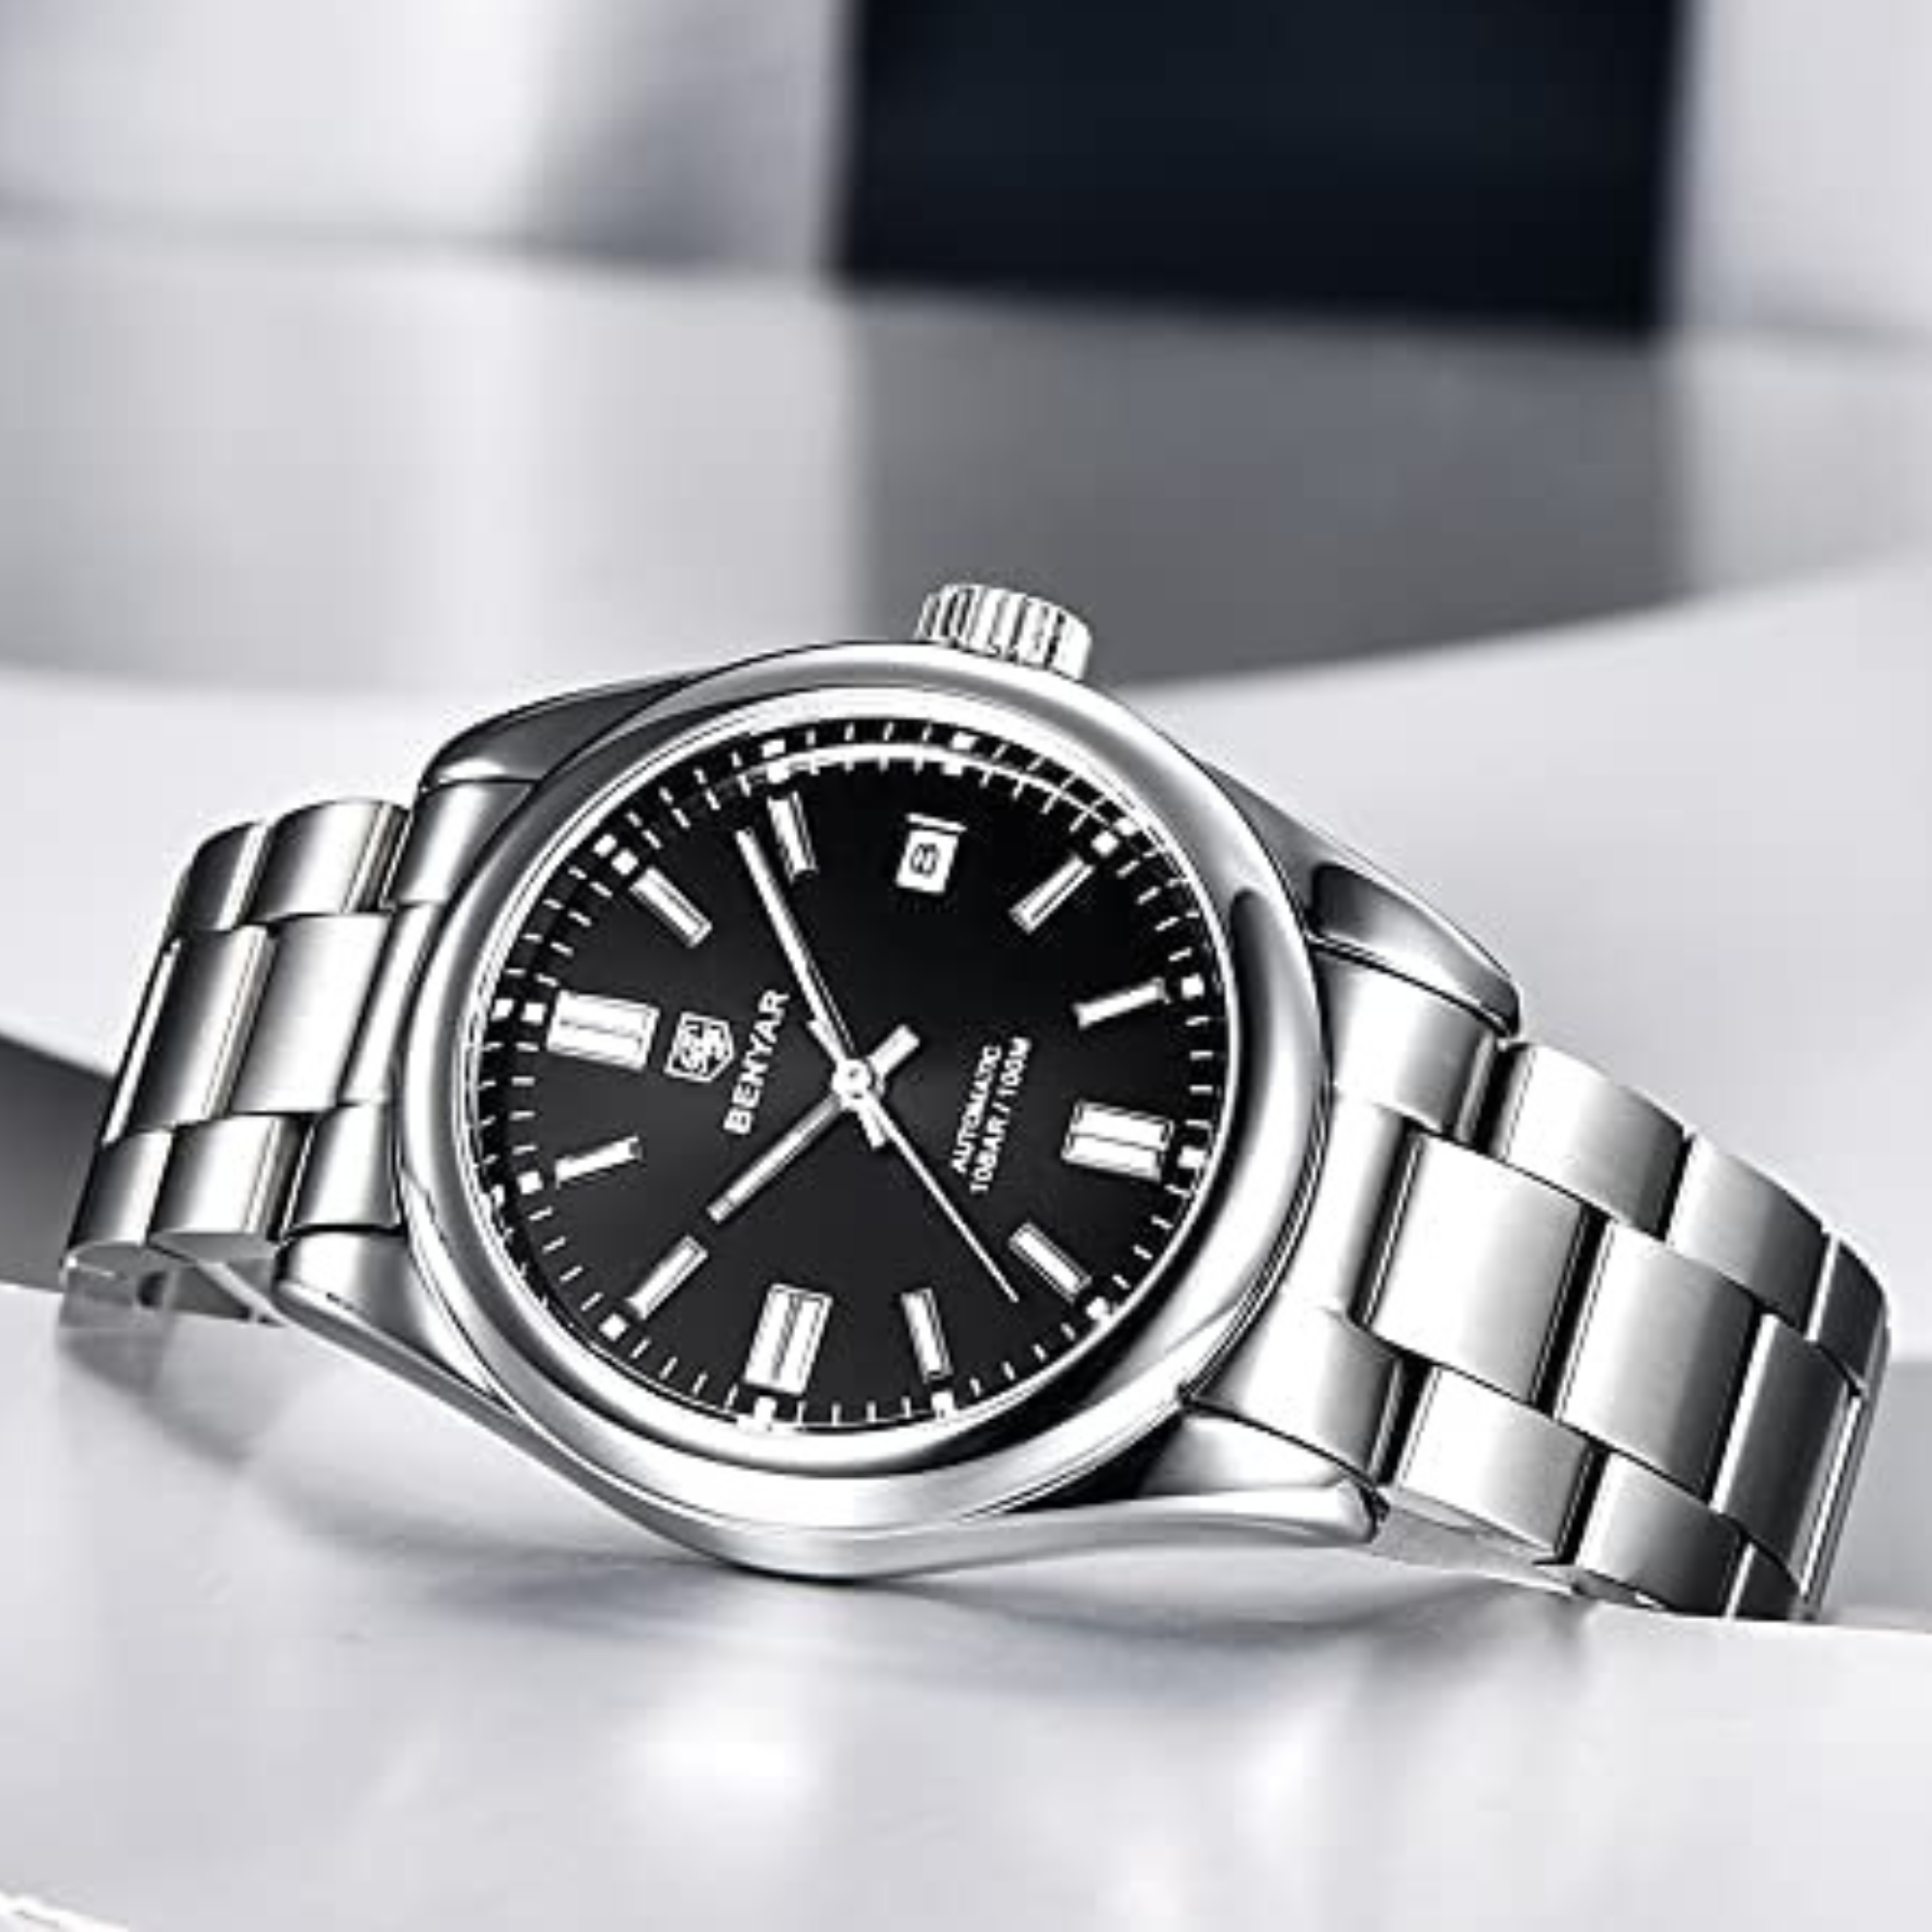 BENYAR Classic Men's Watch Stainless Steel Strap Waterproof Luminous Simple Business Sports Wristwatch - Black Dial benyar watches online india dream watches